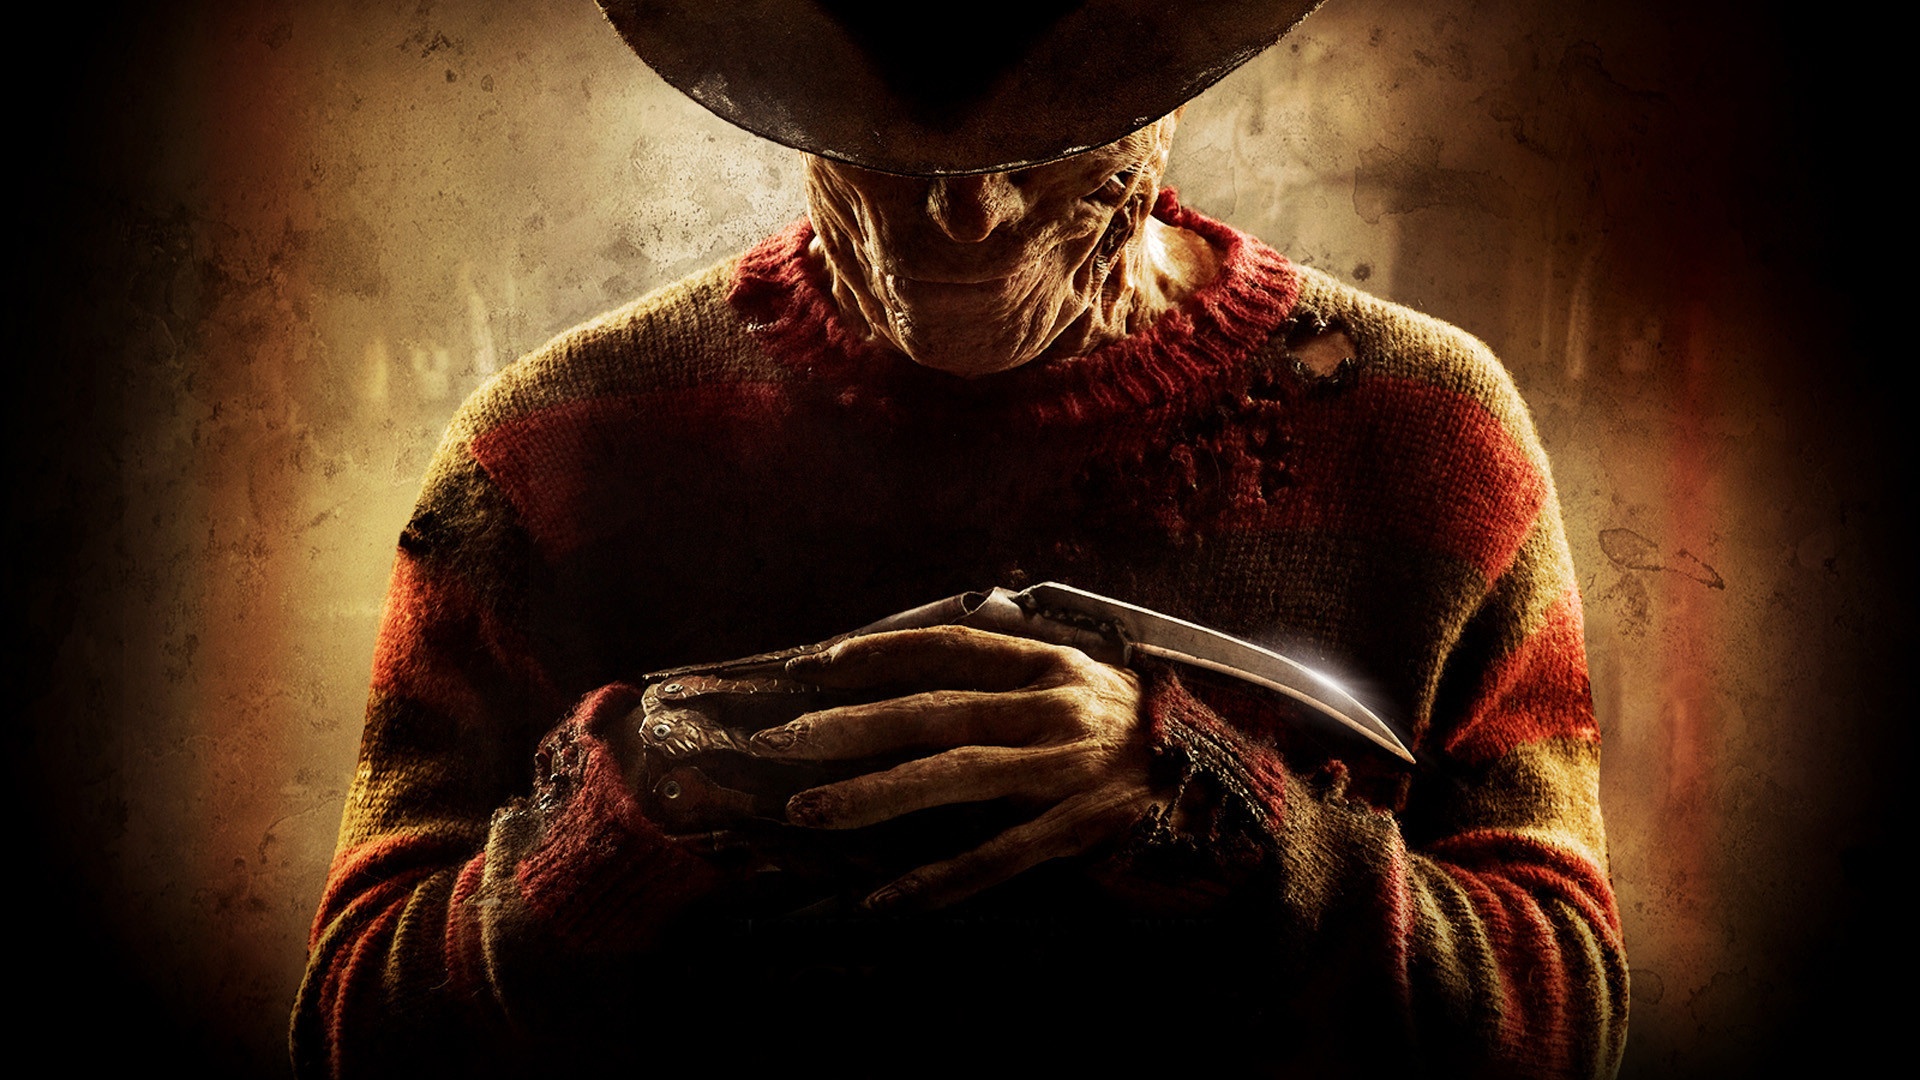 Movie A Nightmare On Elm Street (2010) HD Wallpaper | Background Image